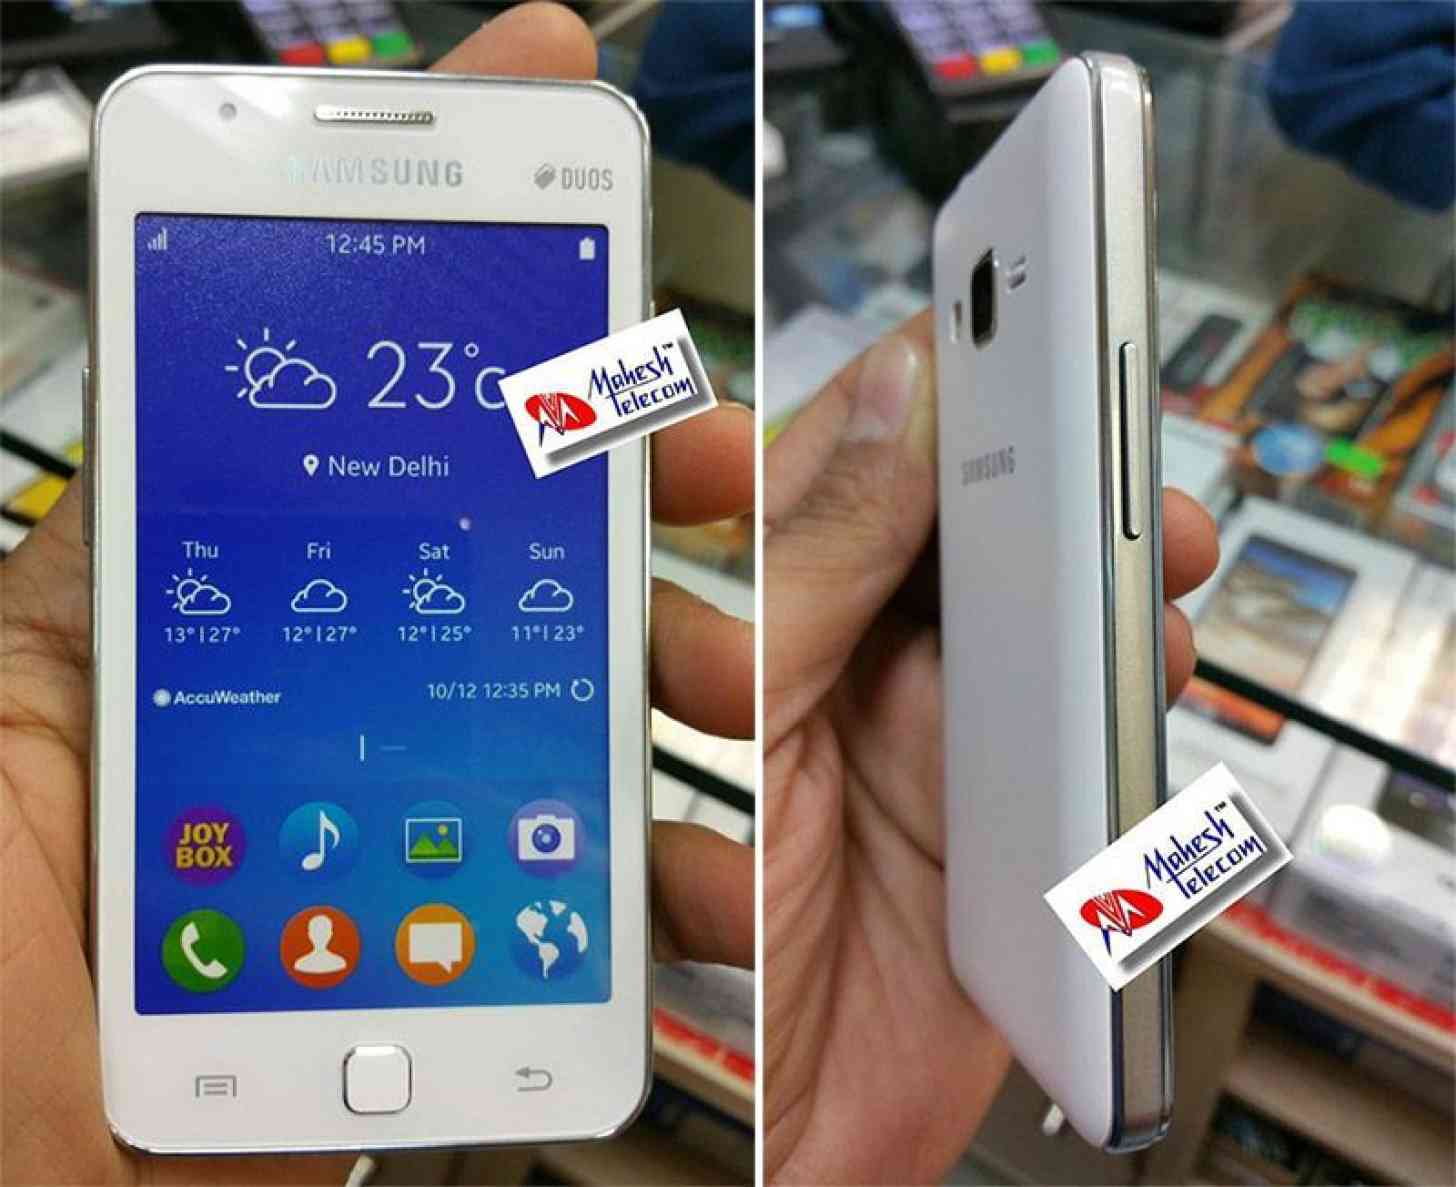 Samsung Z1 Tizen images leak